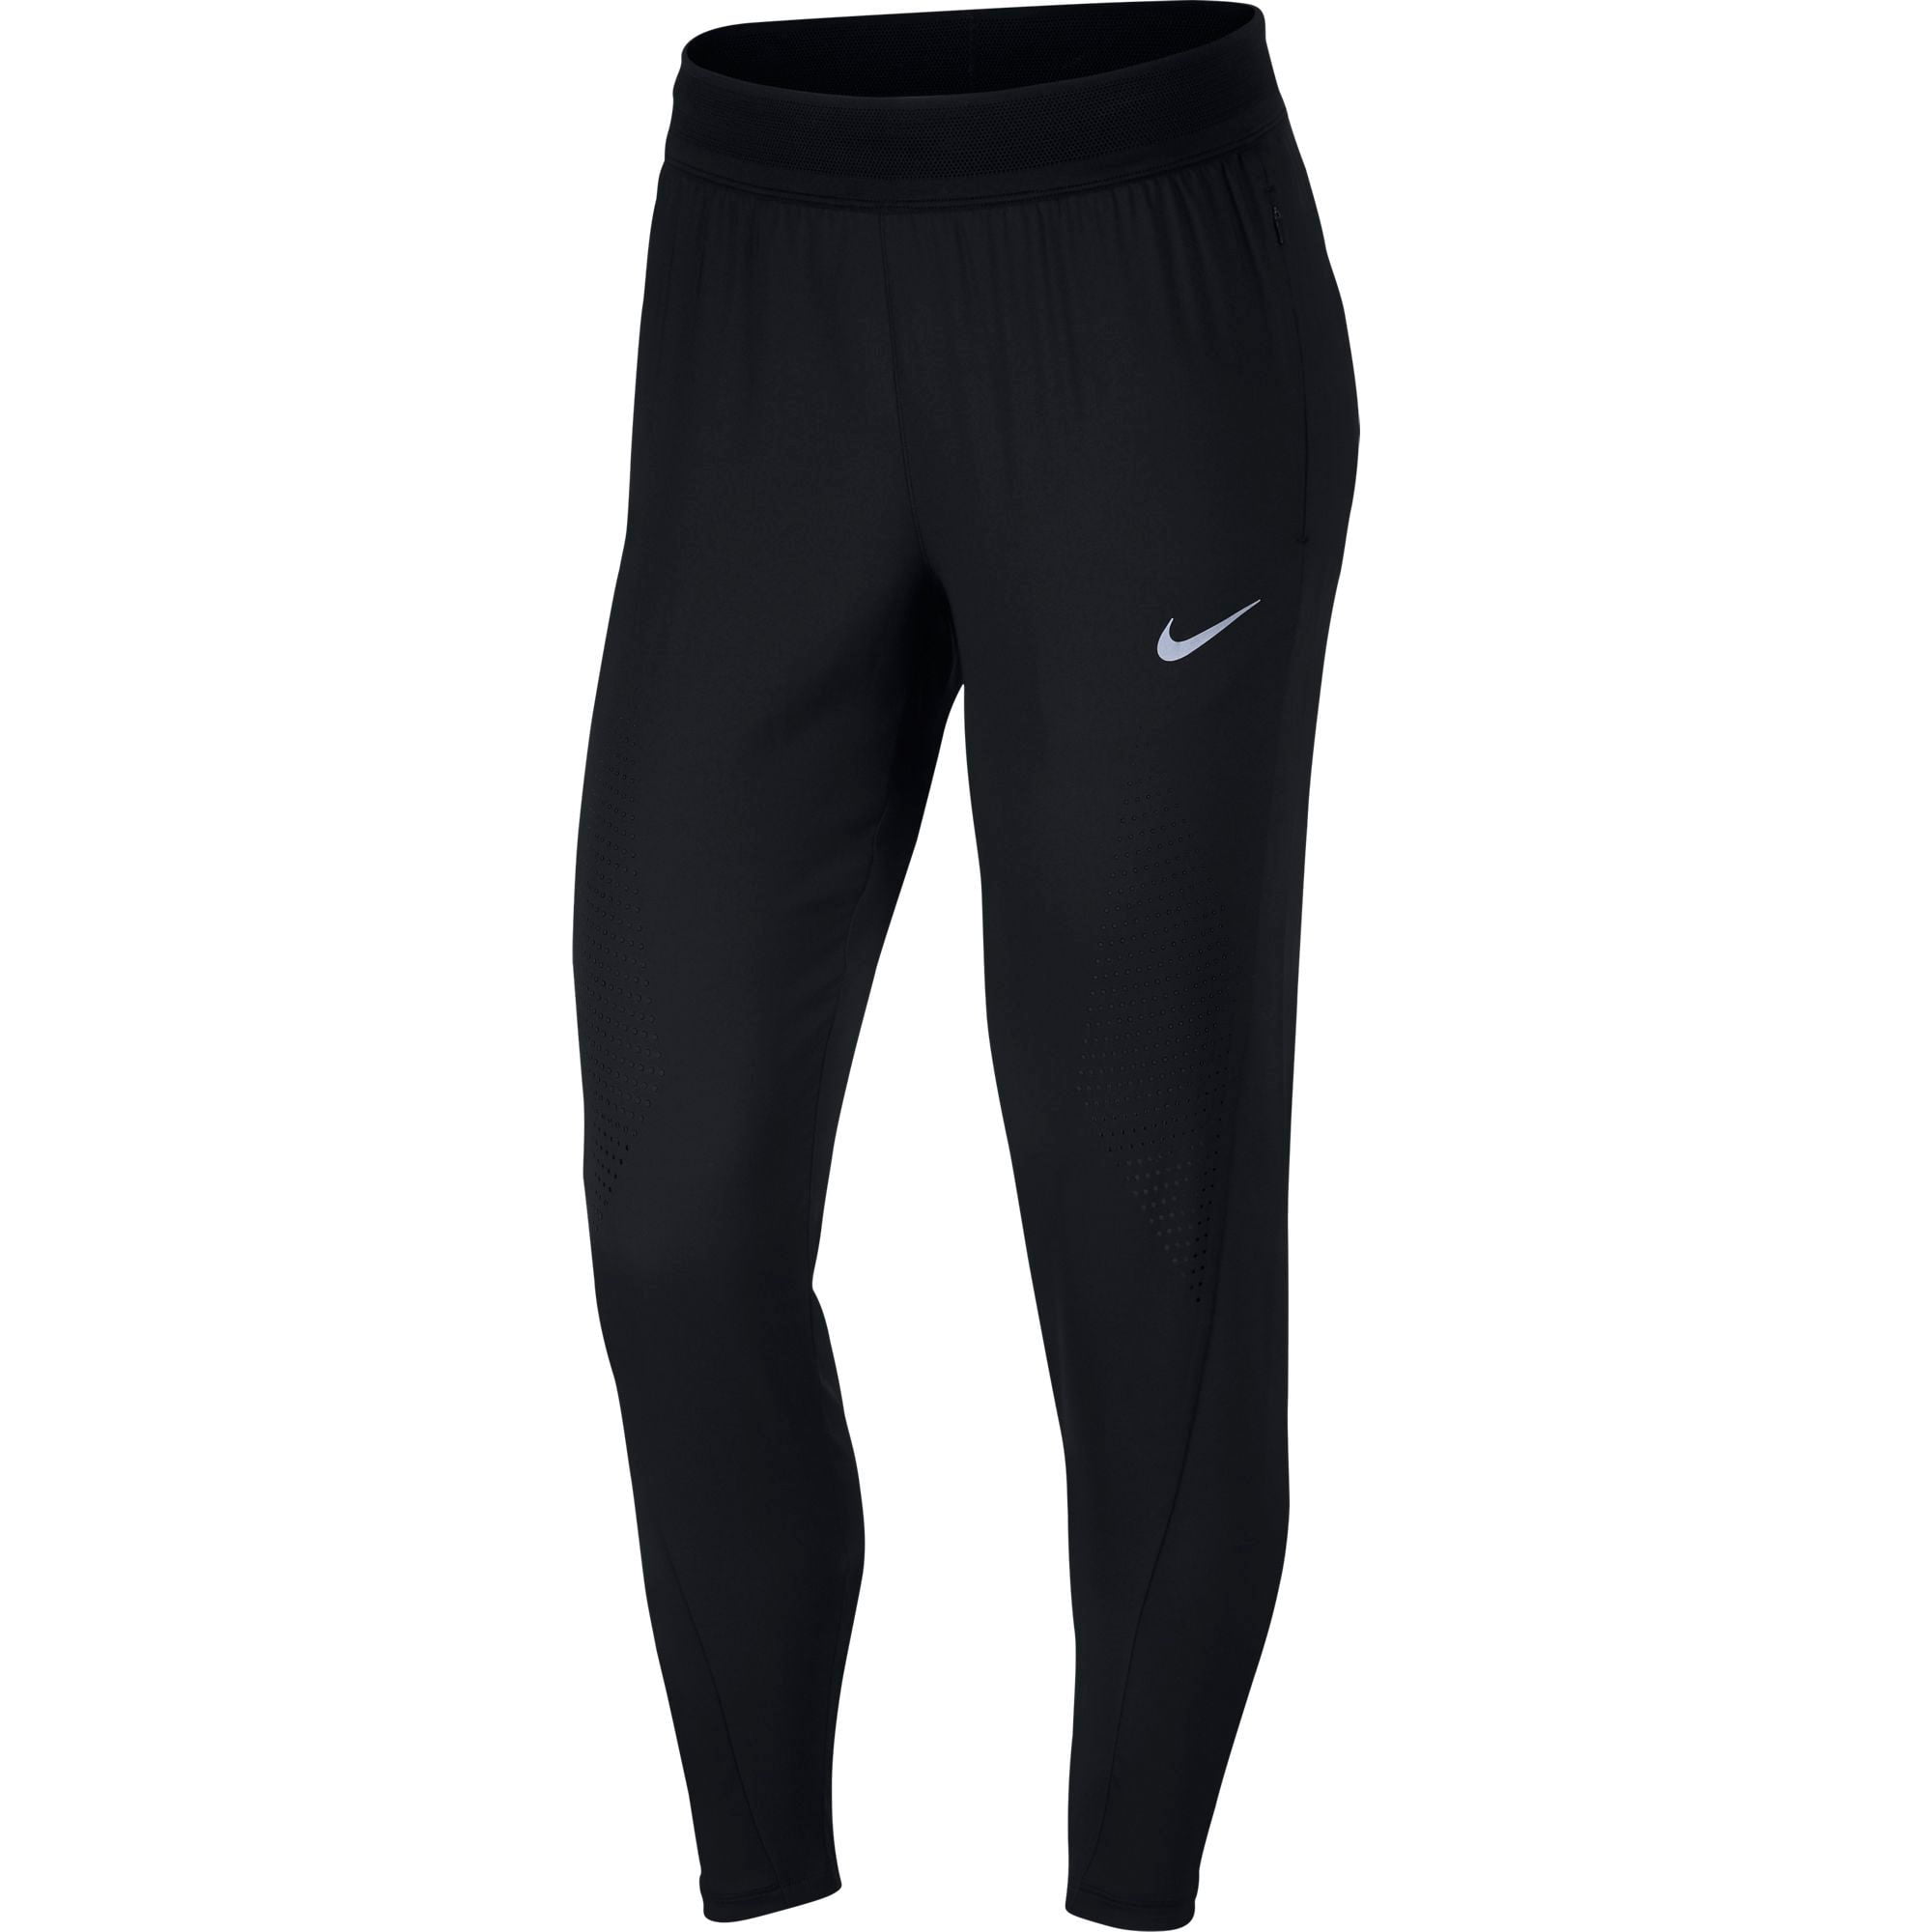 Nike - Nike Women's Swift Running Pants - Walmart.com - Walmart.com